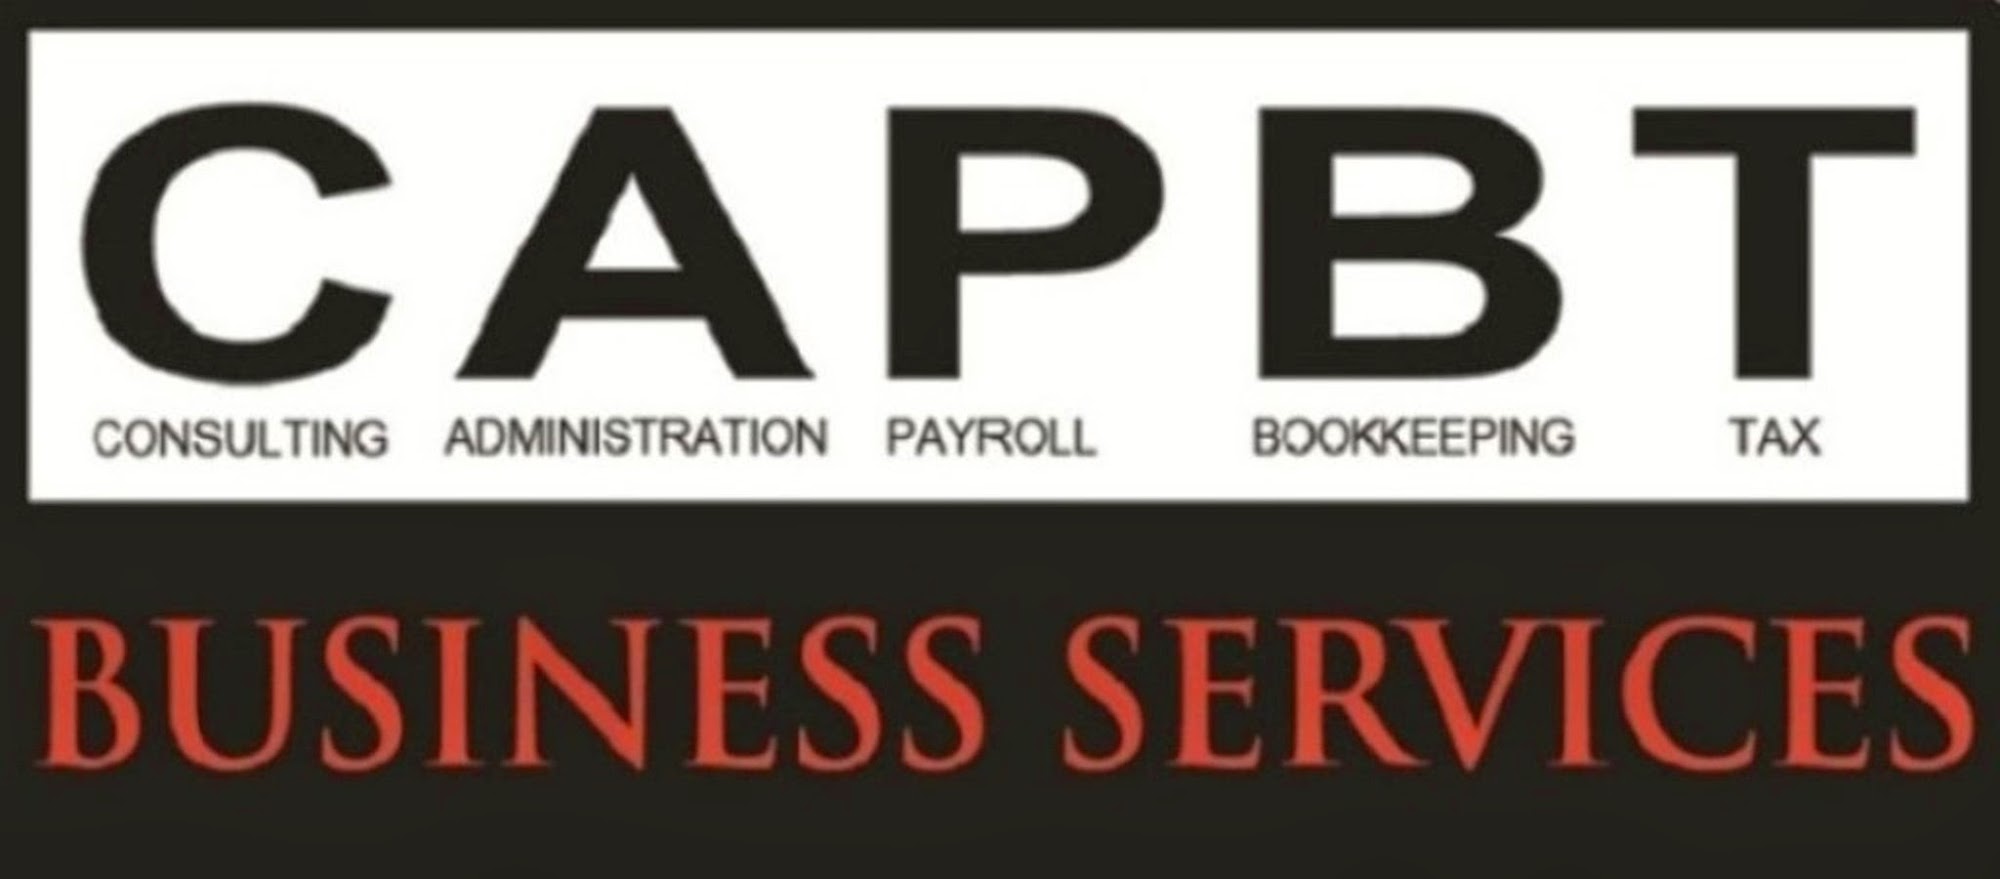 Income Tax Service LLC